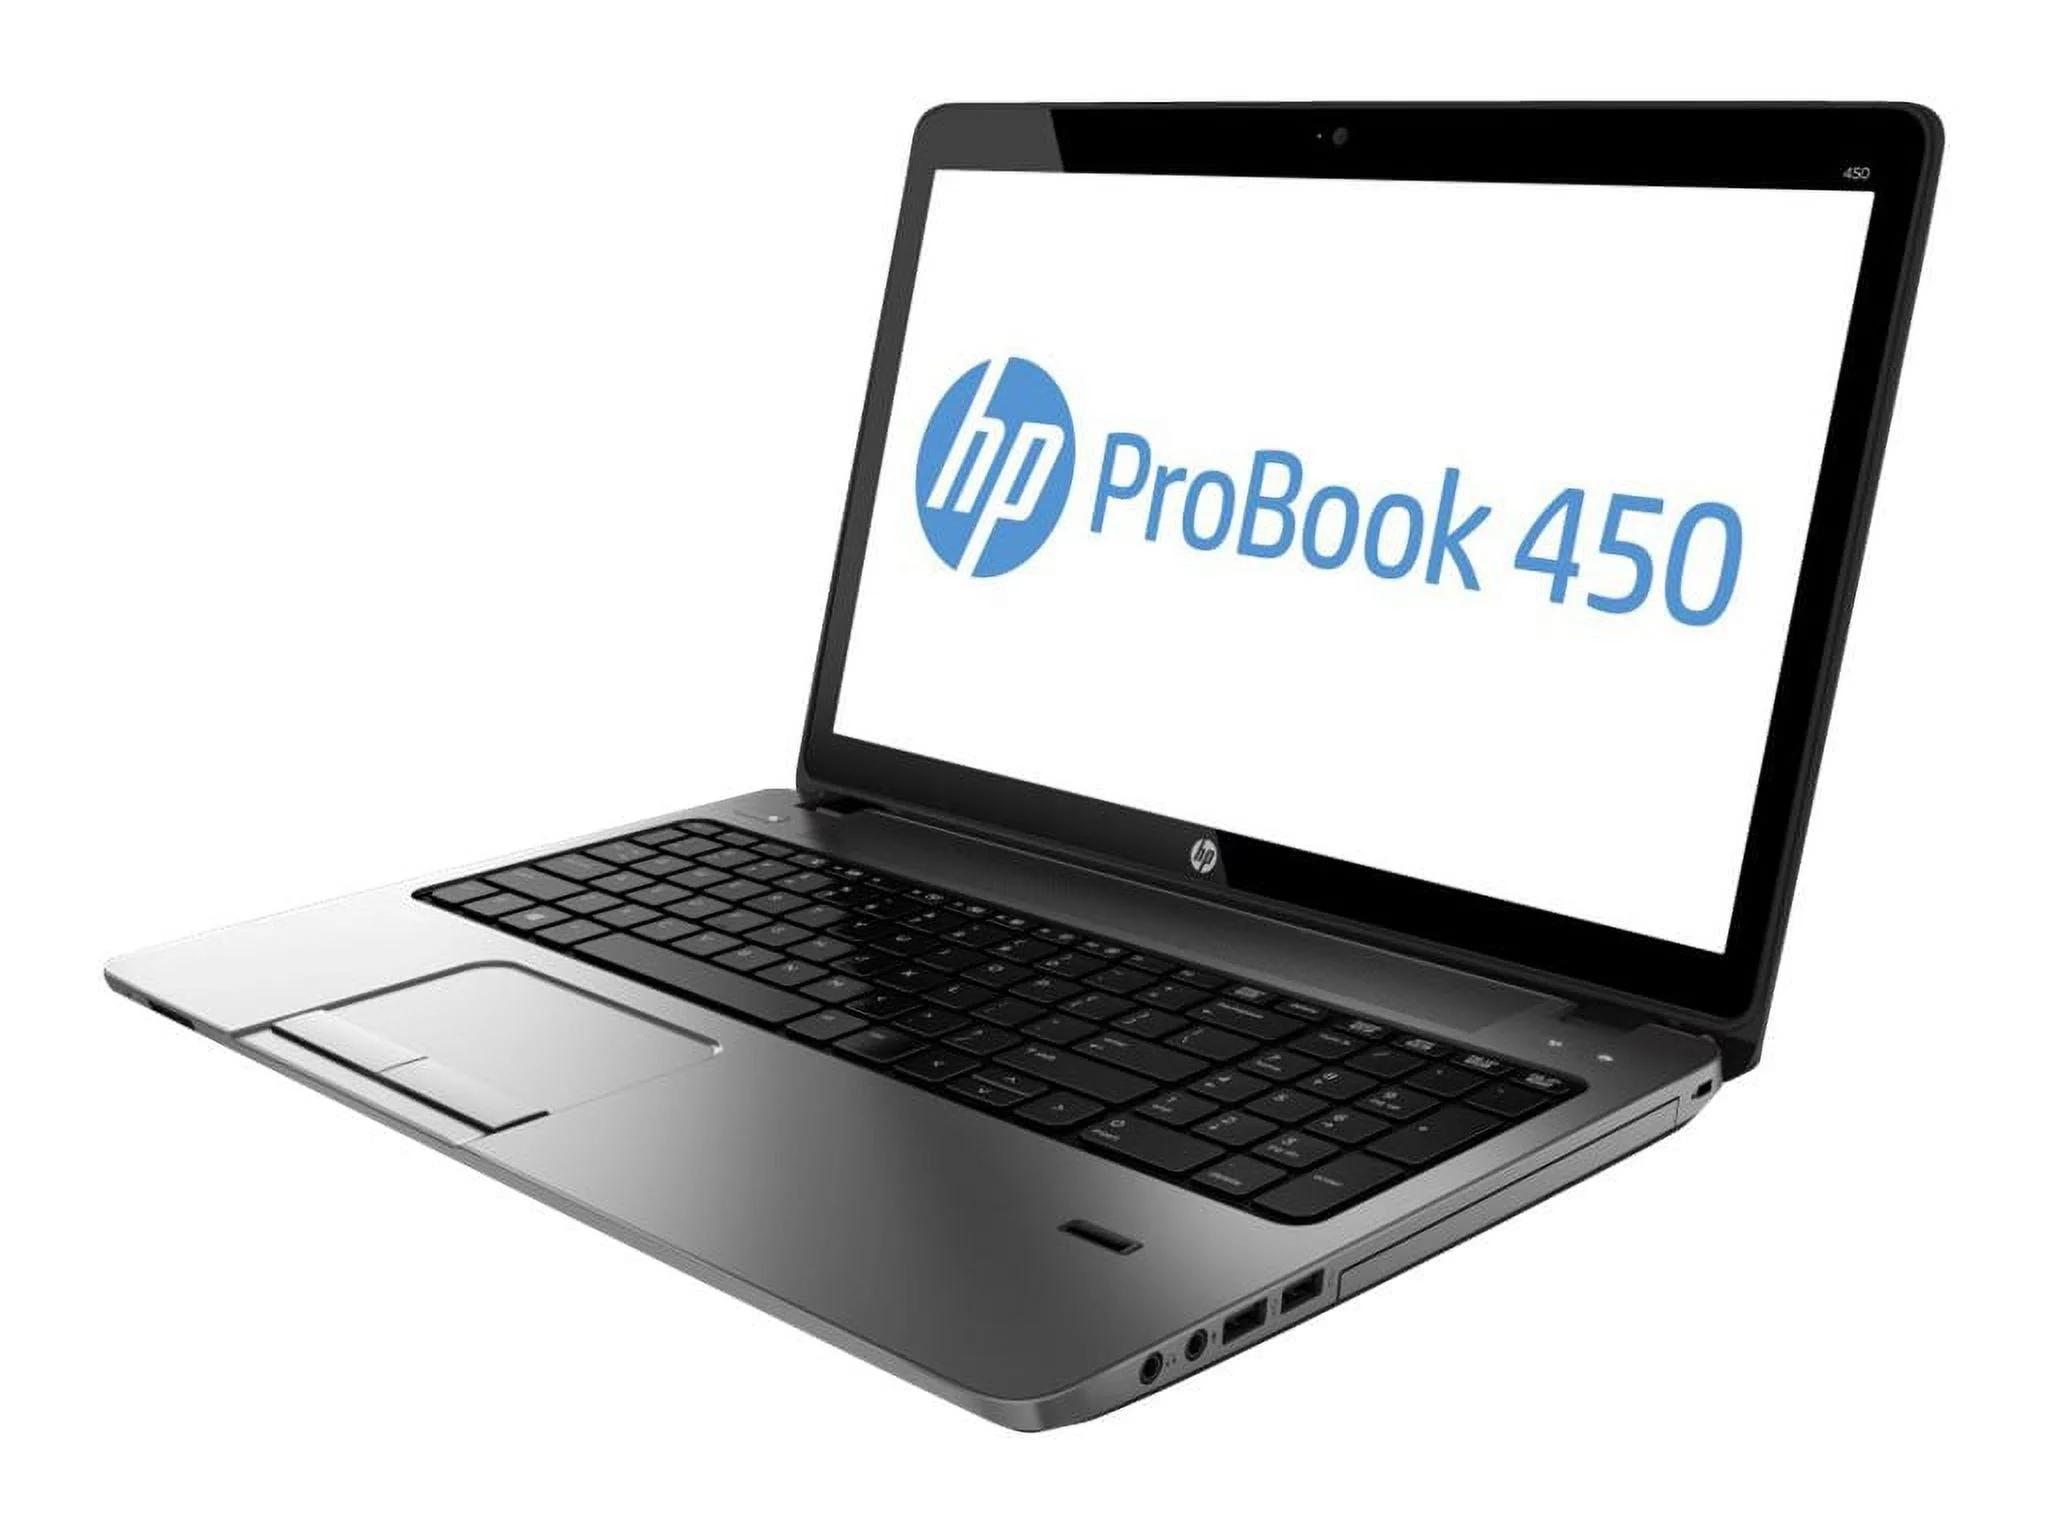 hewlett packard hp probook 450 i7 4702mq - Is HP ProBook Core i7 good for gaming